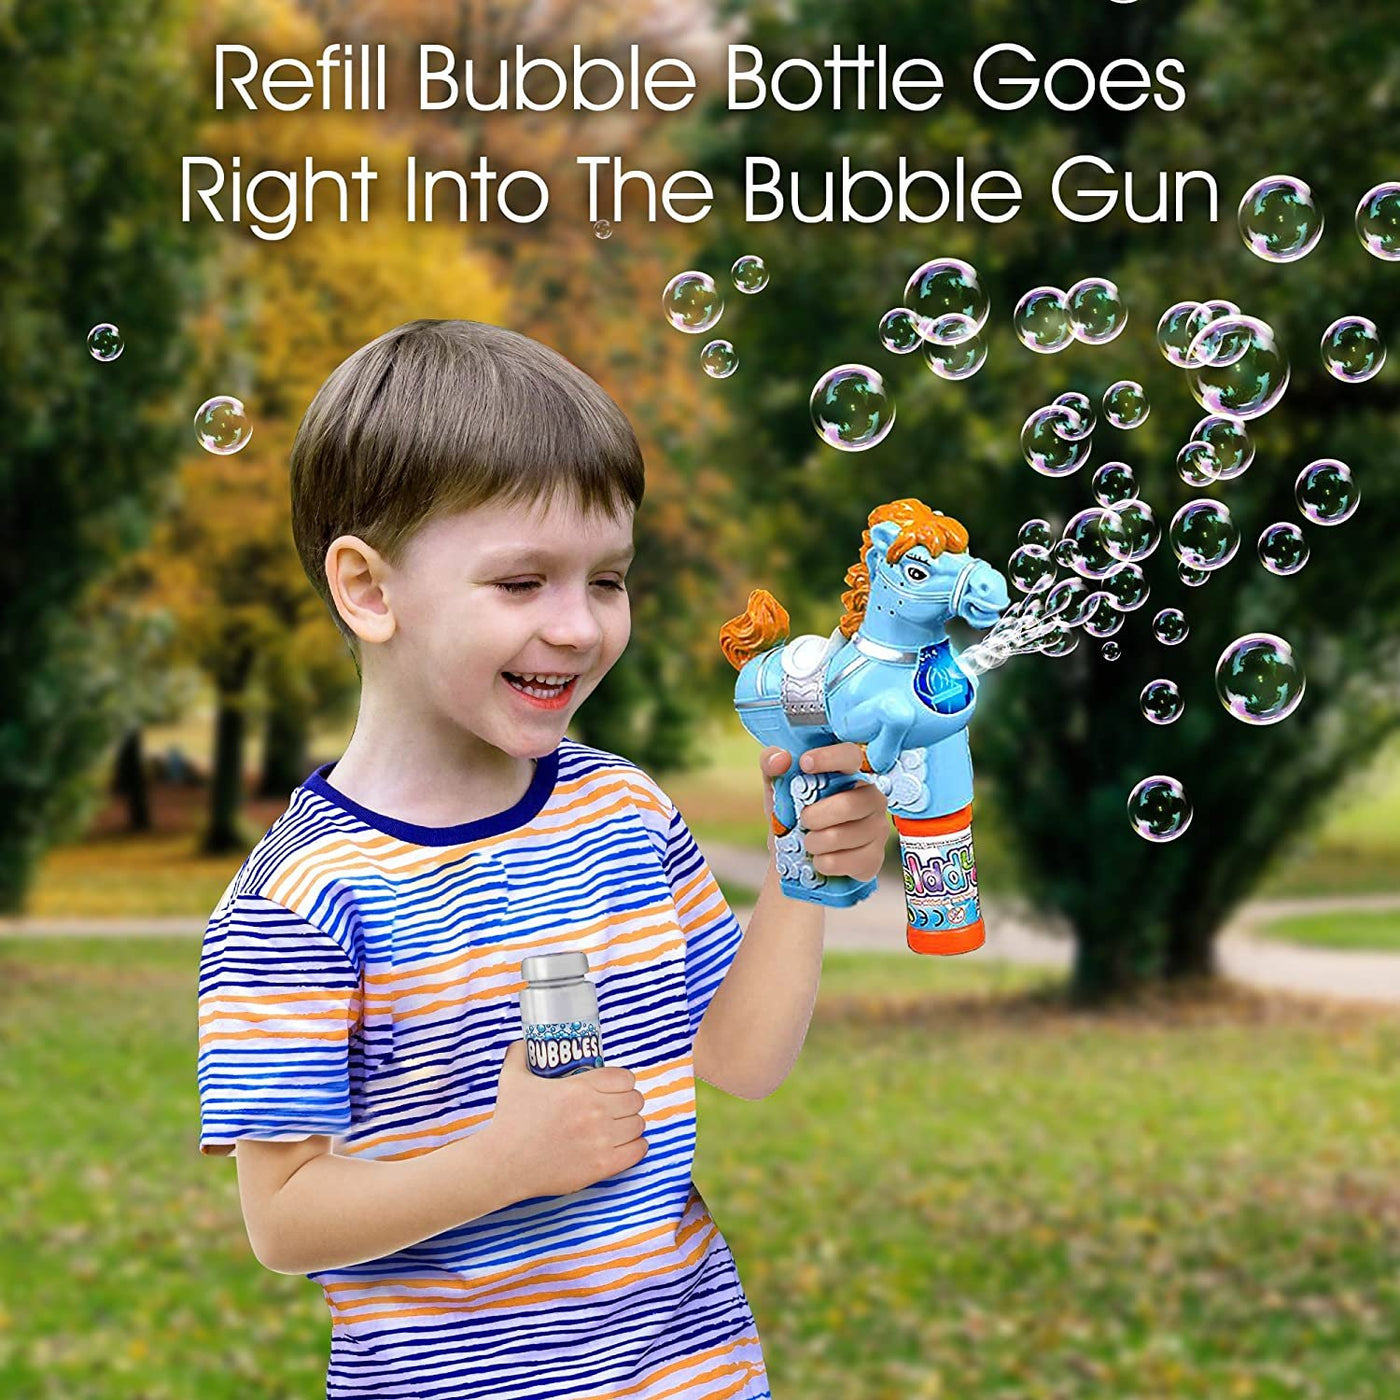 4 oz Bubble Solution Refill for Bubble Guns - 24 Pack 4oz Each - 24 Bottles Non-Toxic Bubble Fluid for Kids - Liquid for Bubble Machine, Bubble Blowing Gun, and Toy Wands